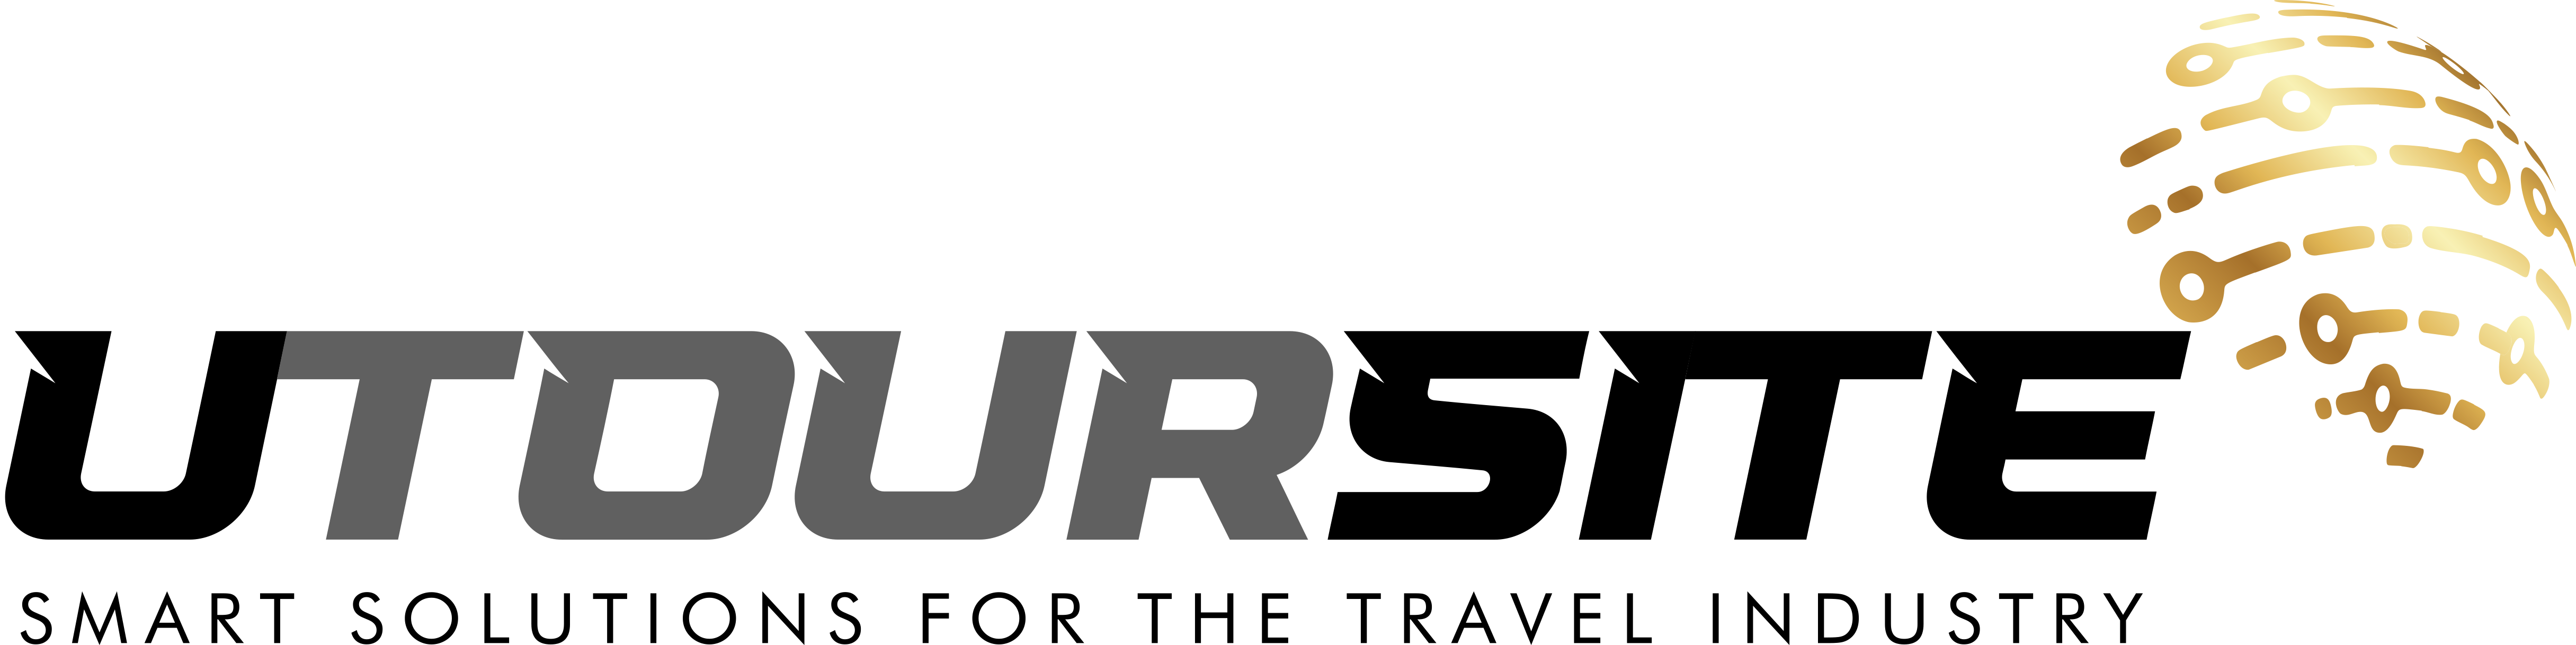 UTourSite Logo